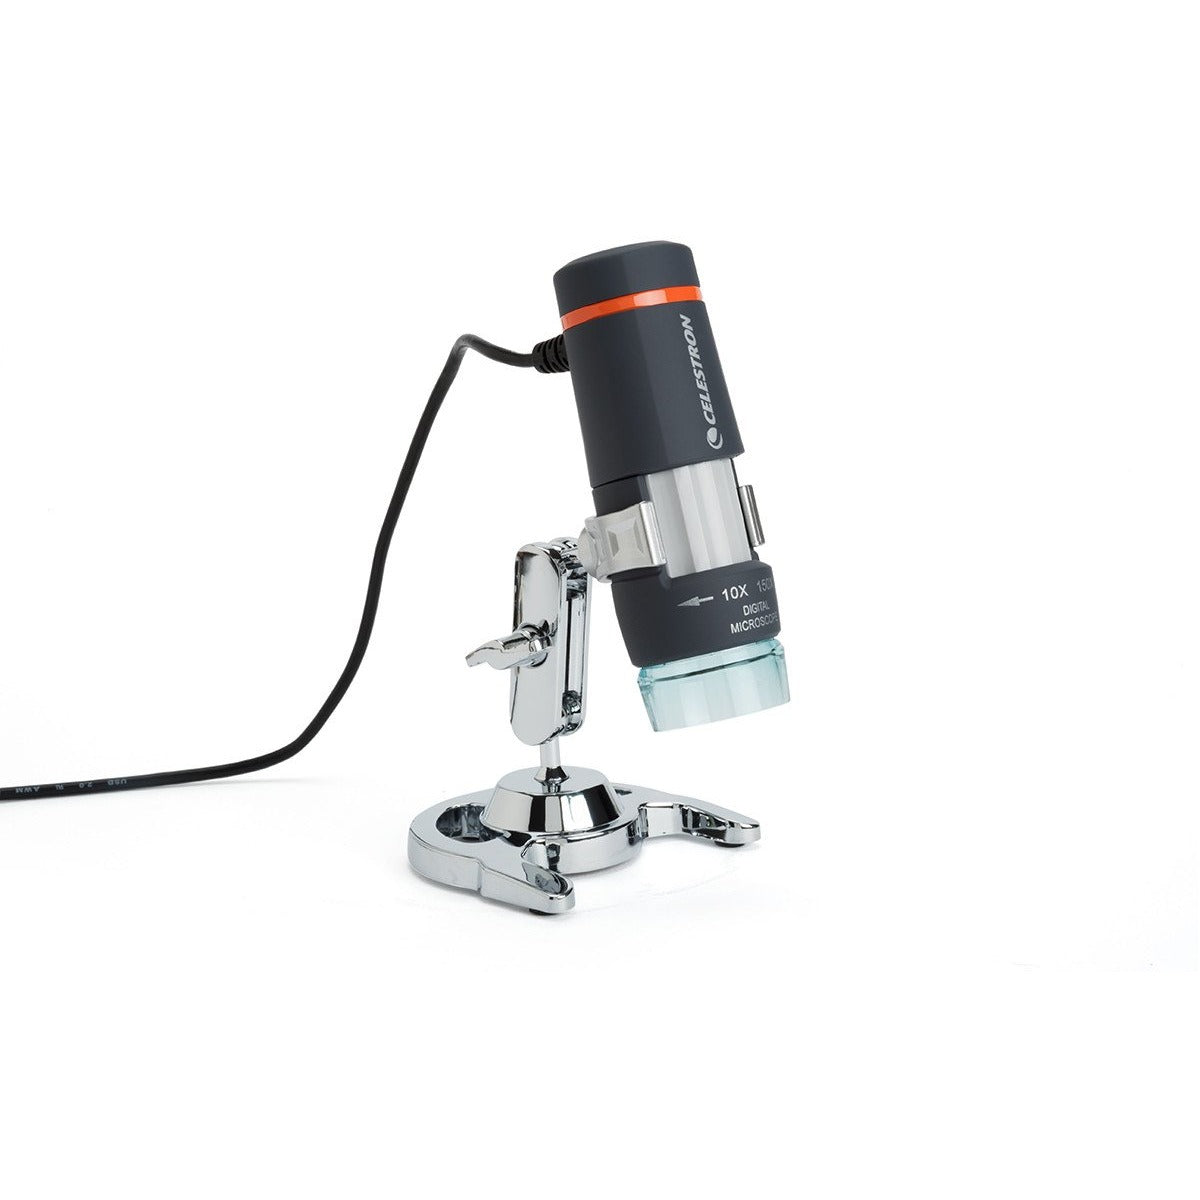 plugable usb 2.0 microscope software